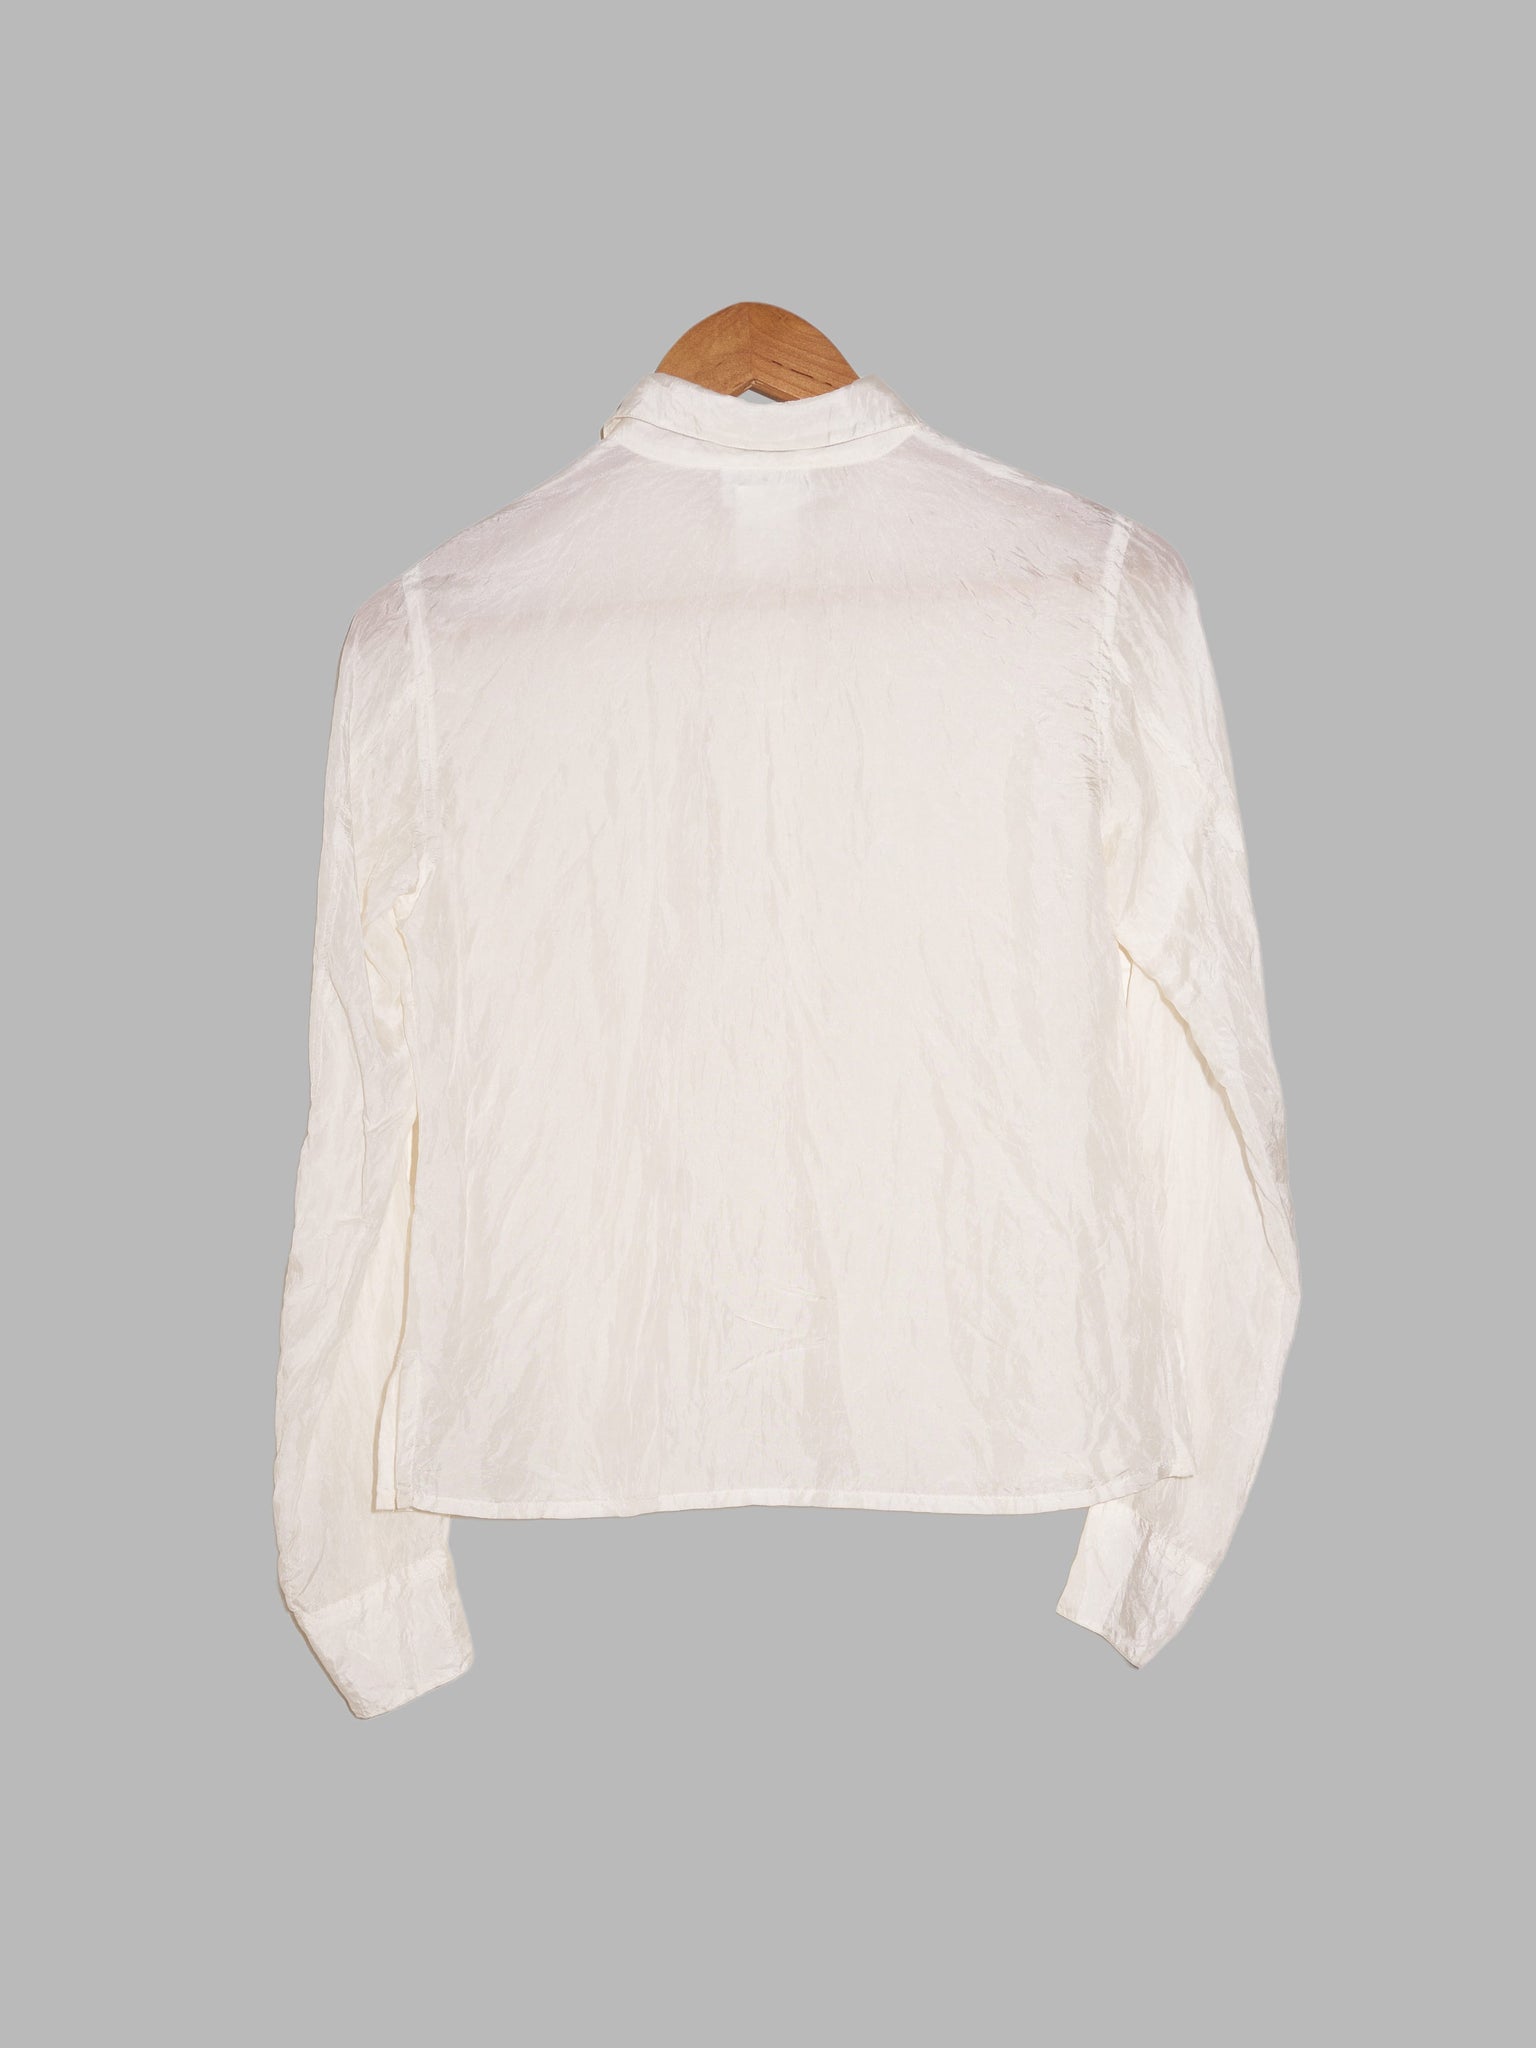 Agnes B Paris 1990s white creased silk shirt - size 2